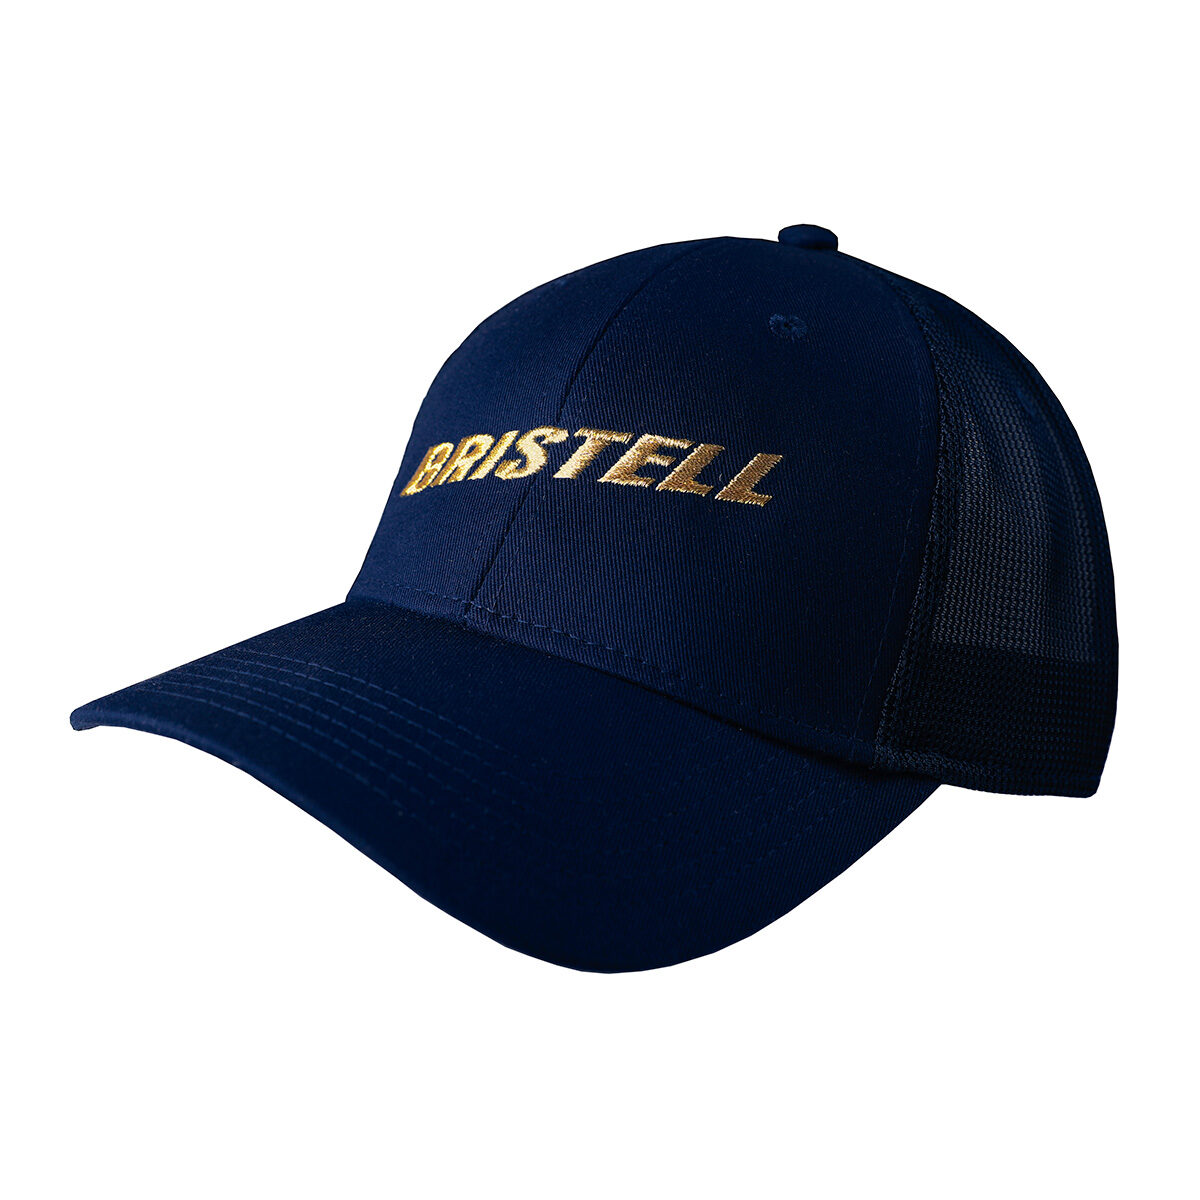 BRISTELL Cap